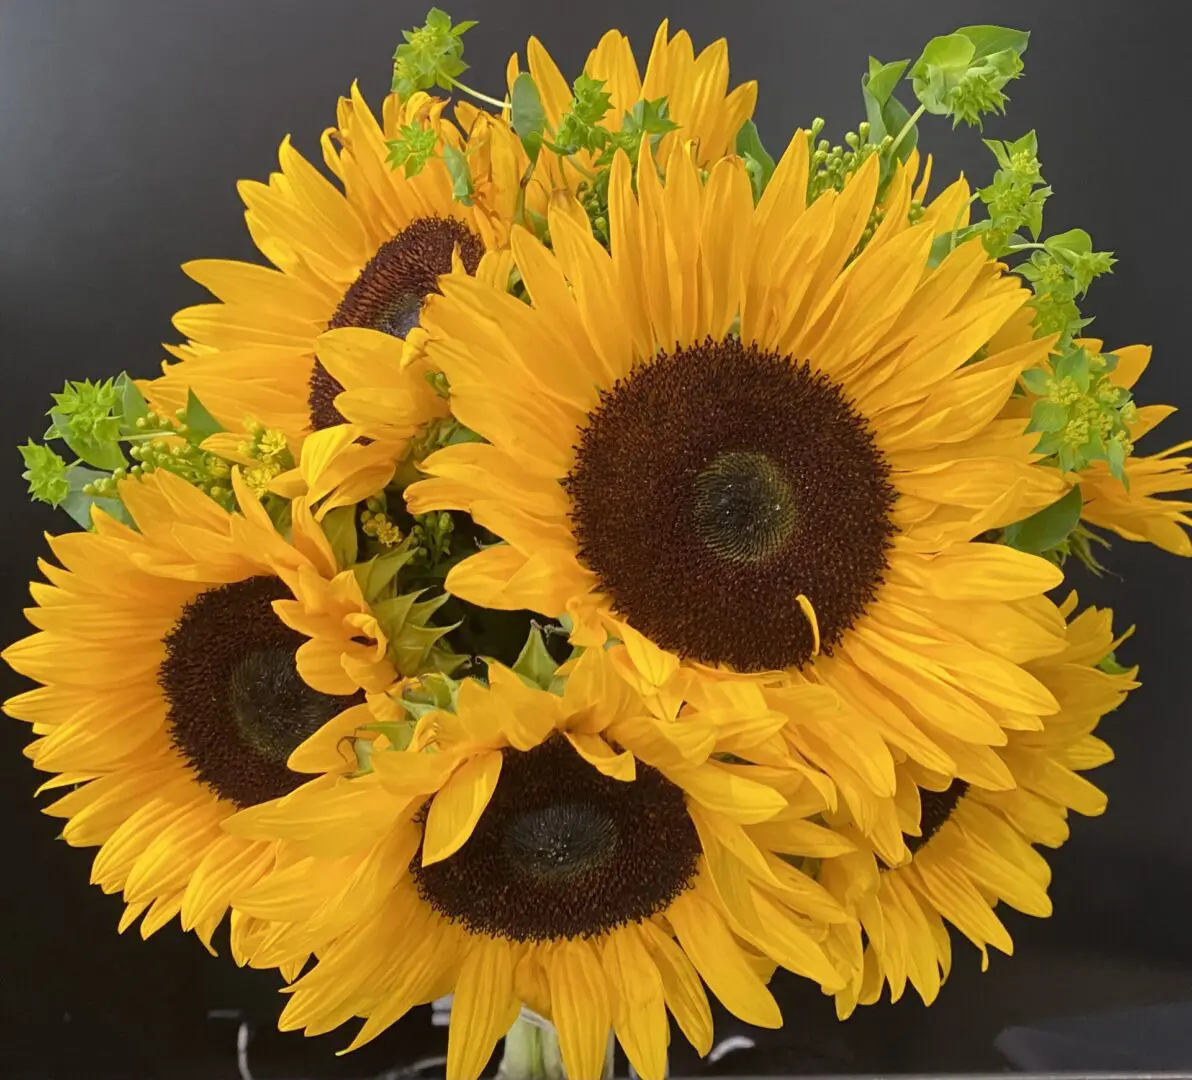 A bundle of sunflowers